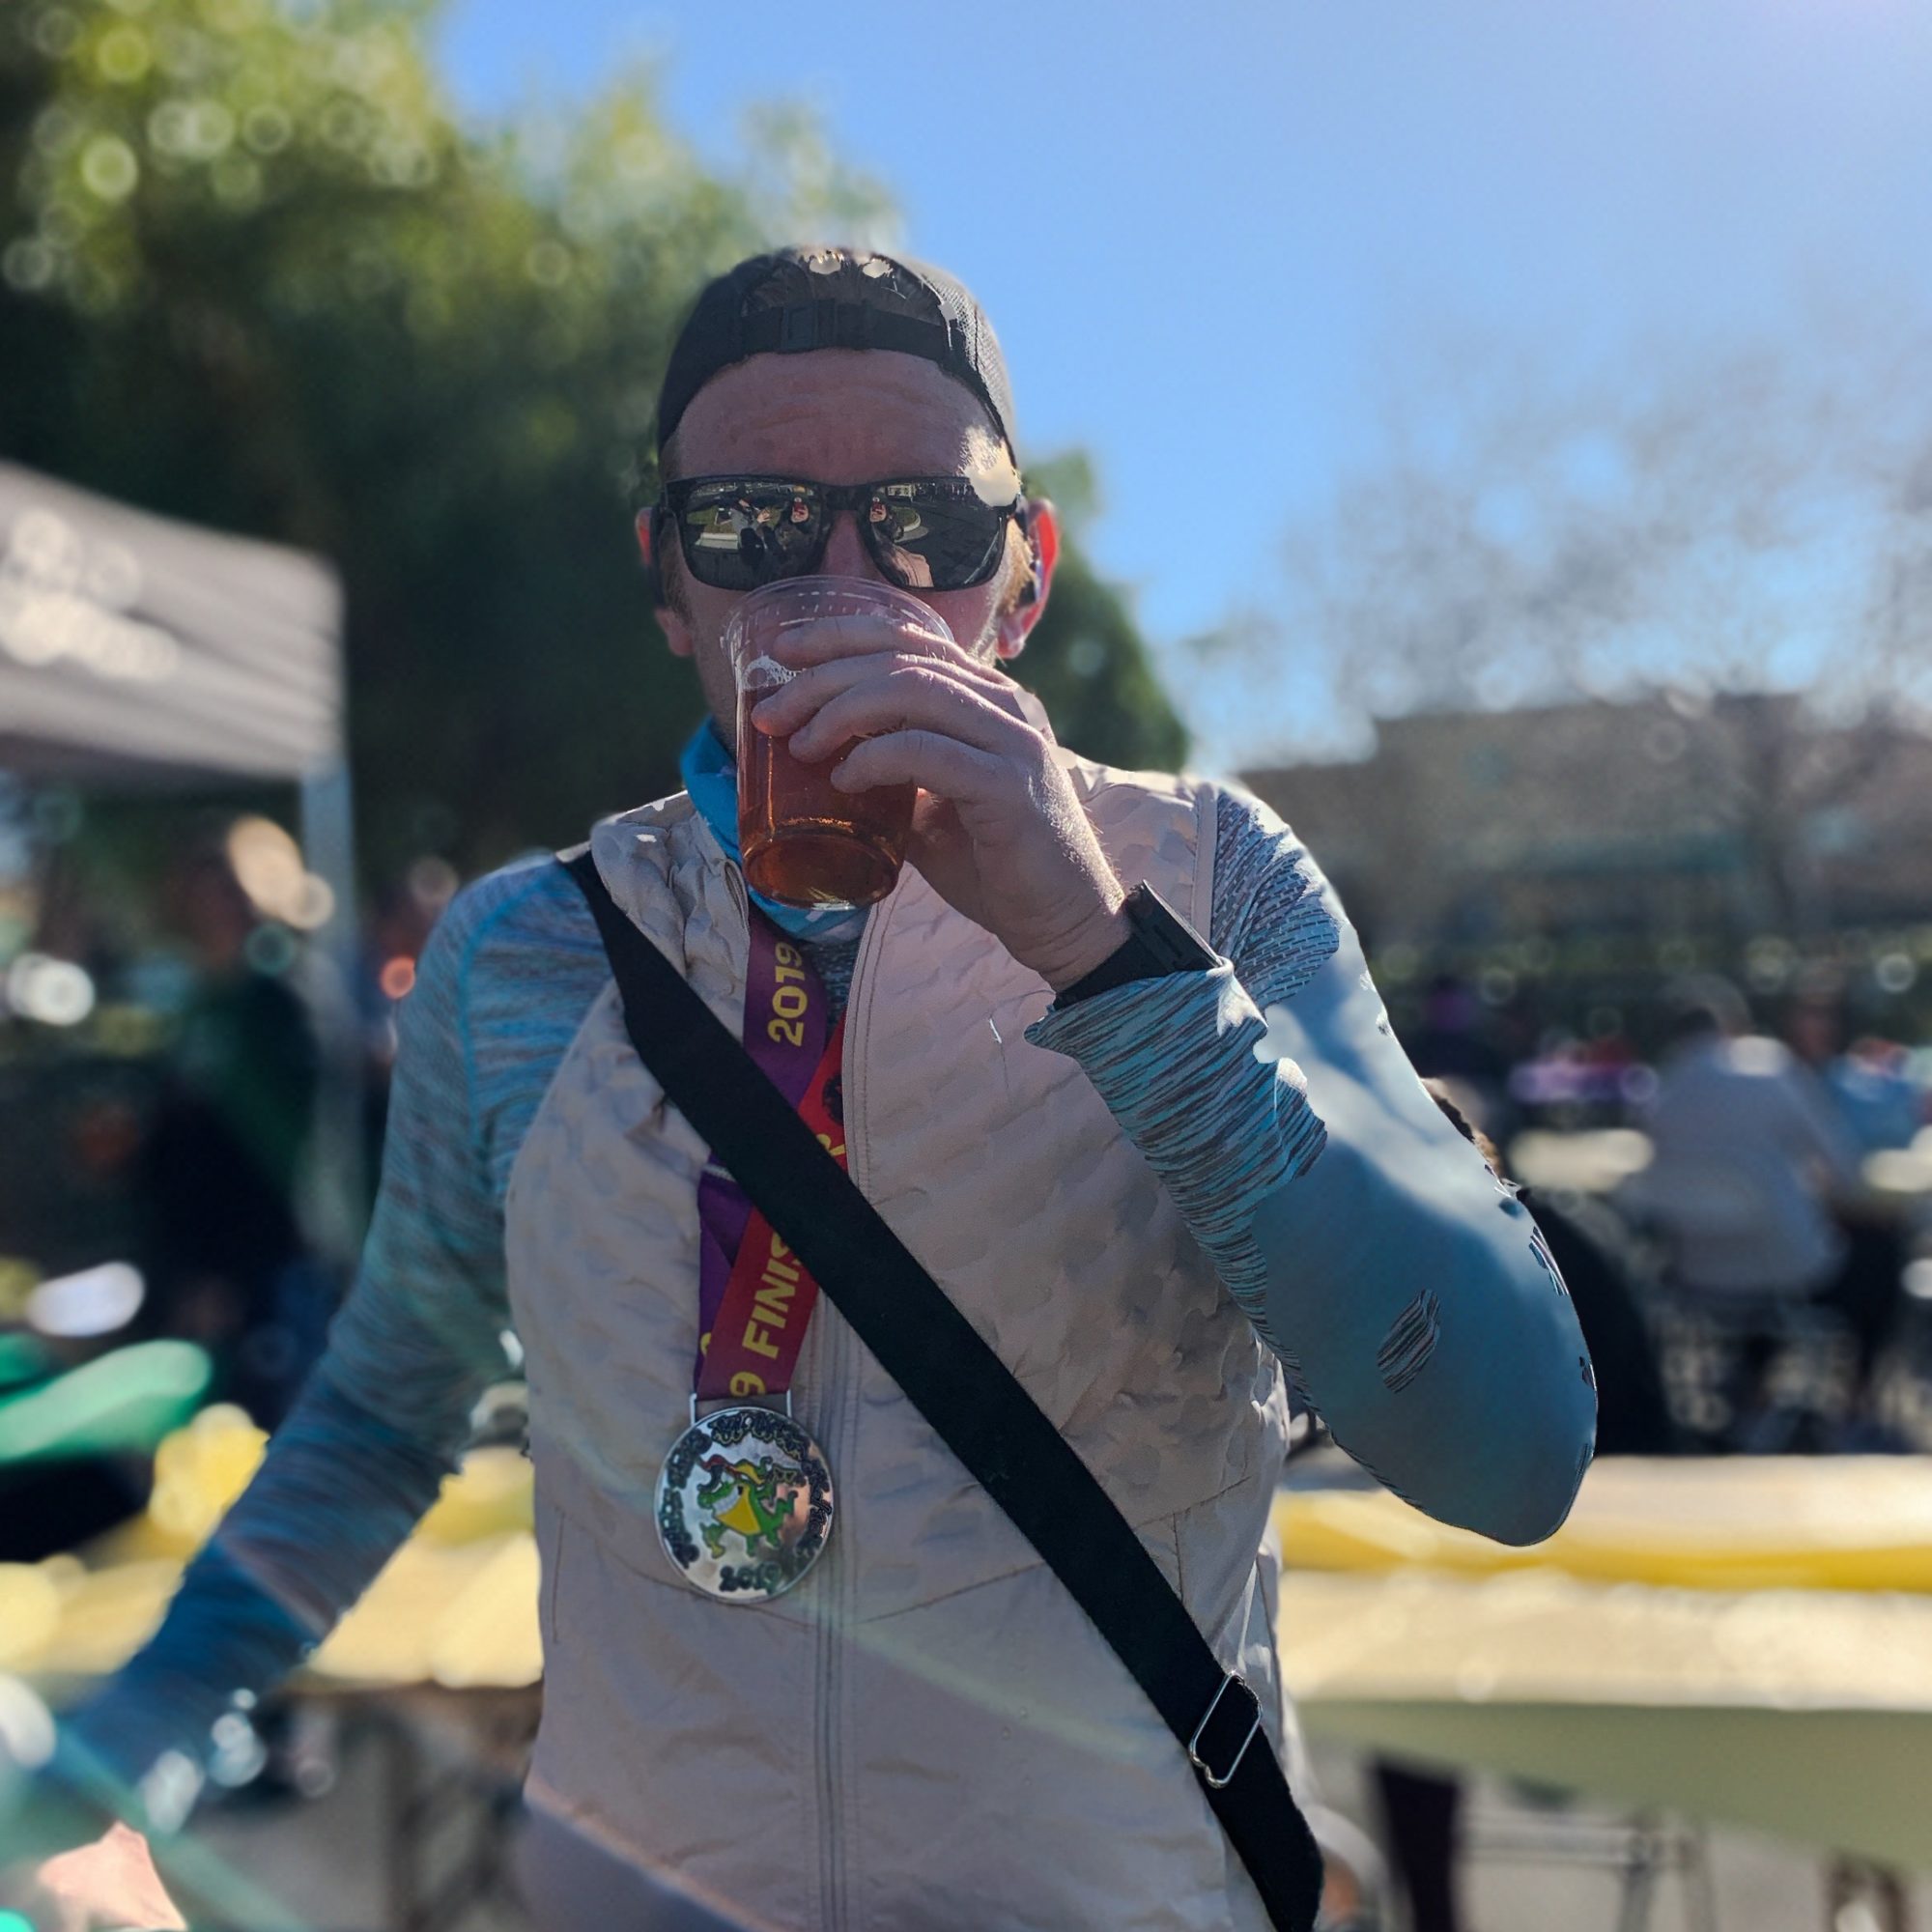 Nathan Imhoff finishing 3rd at Mardi Gra Madness 2019